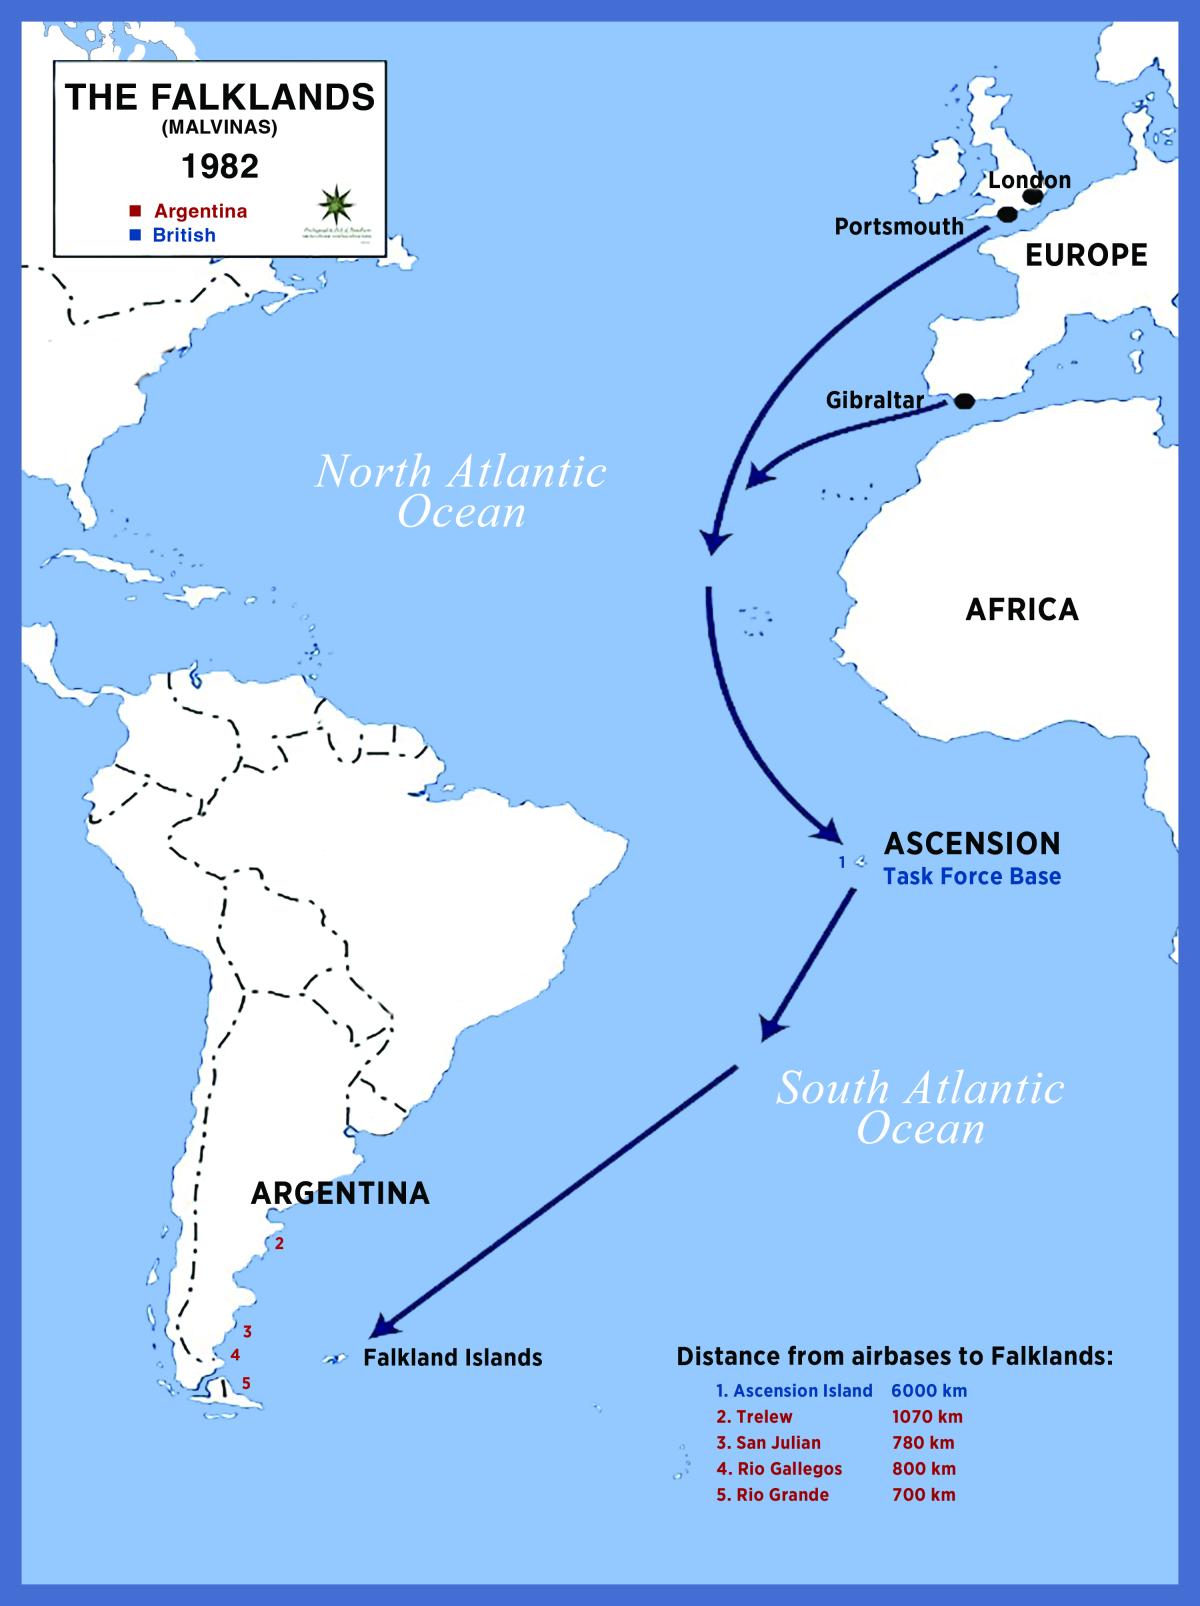 Map 2: Falkland Islands